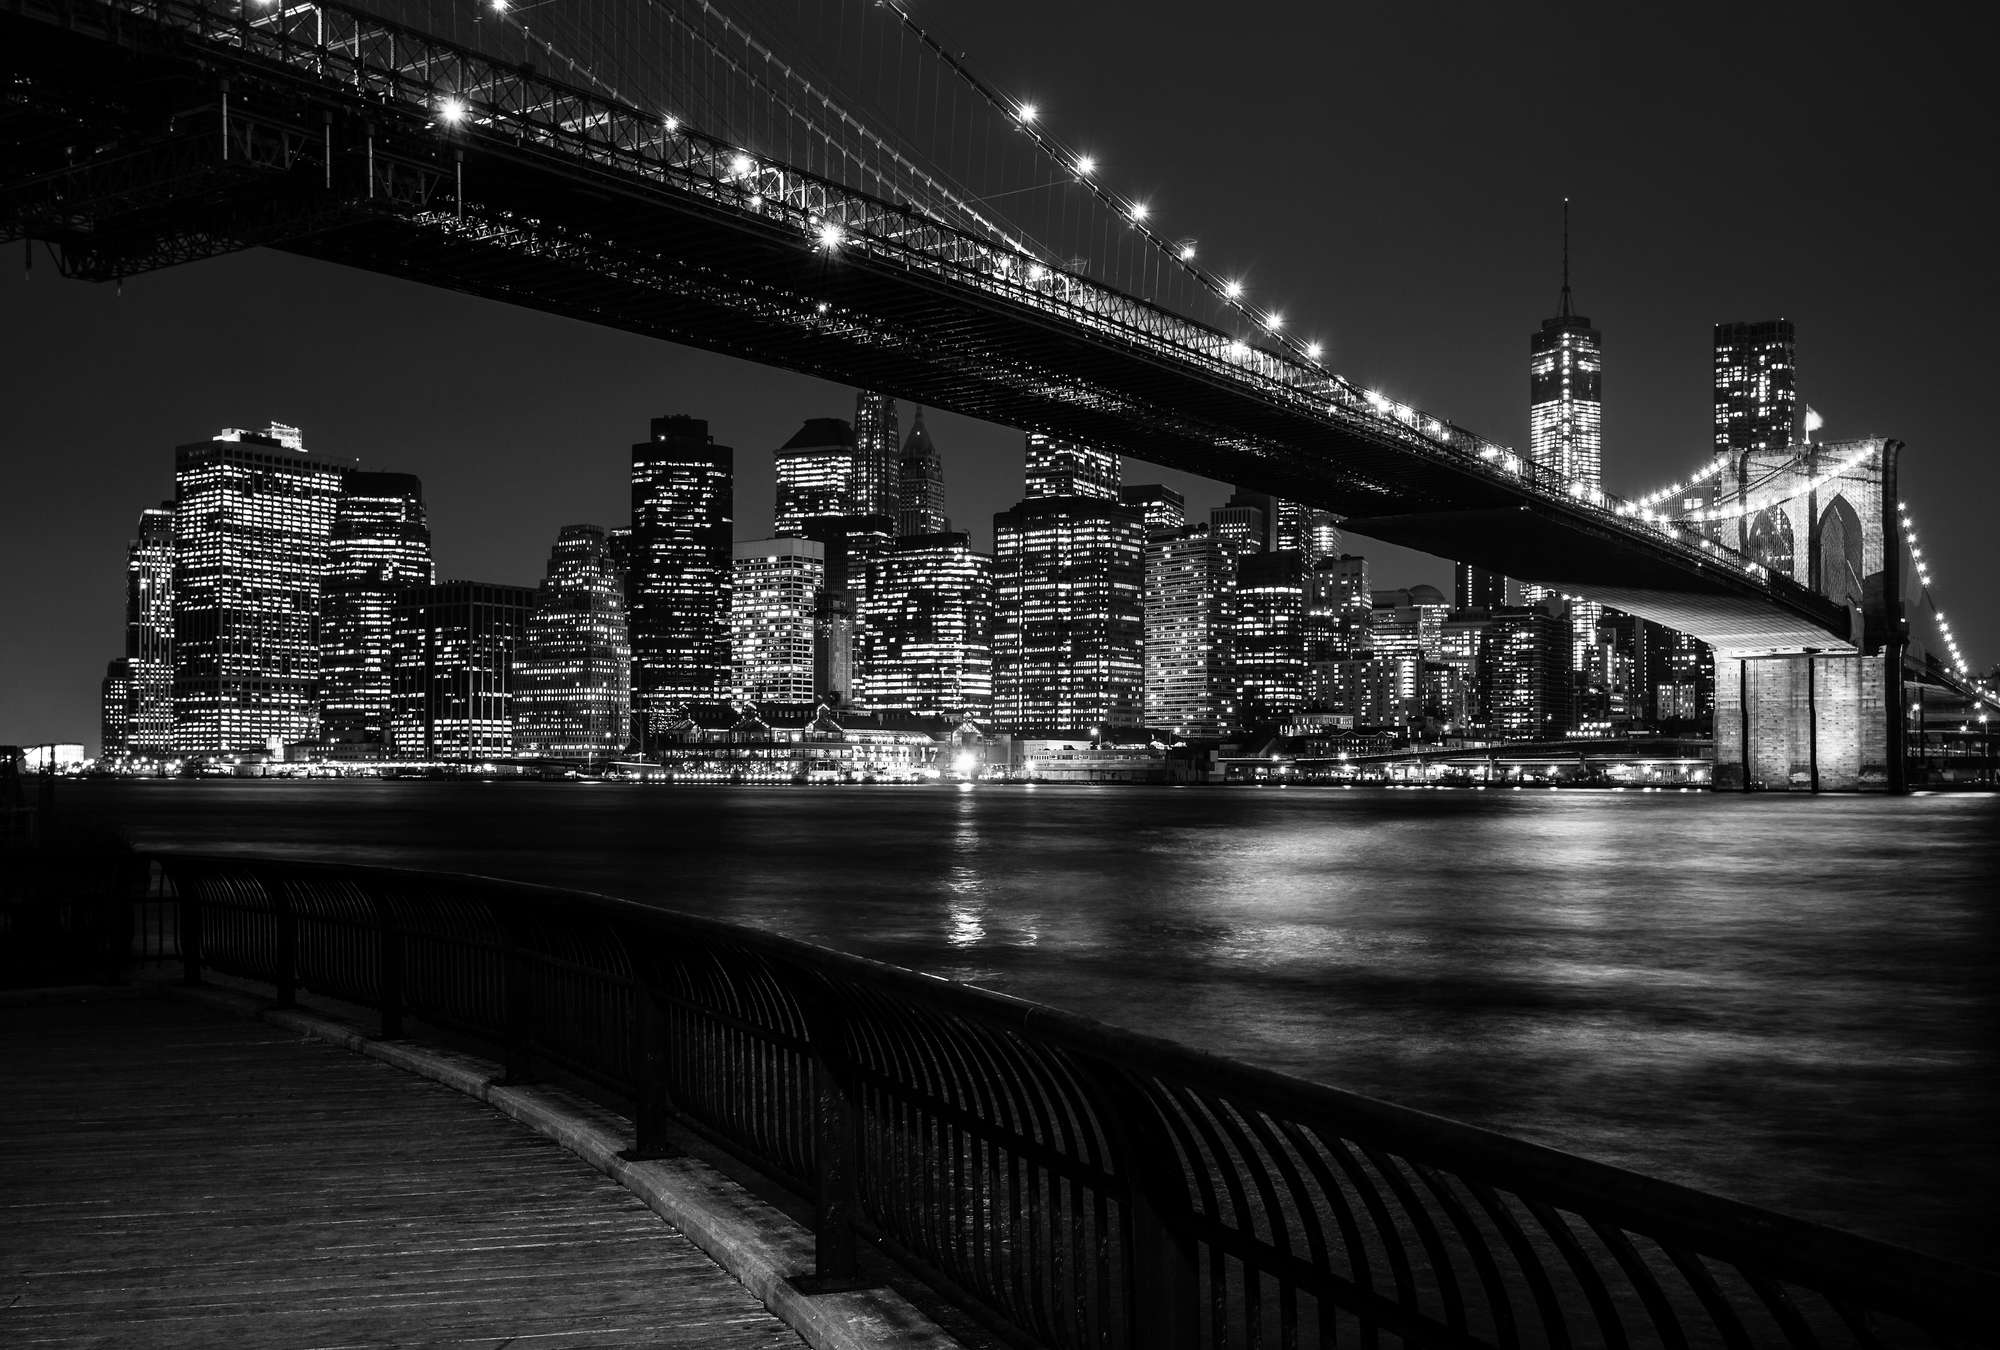             Fotomurali sul ponte di Brooklyn di notte - Bianco e nero
        